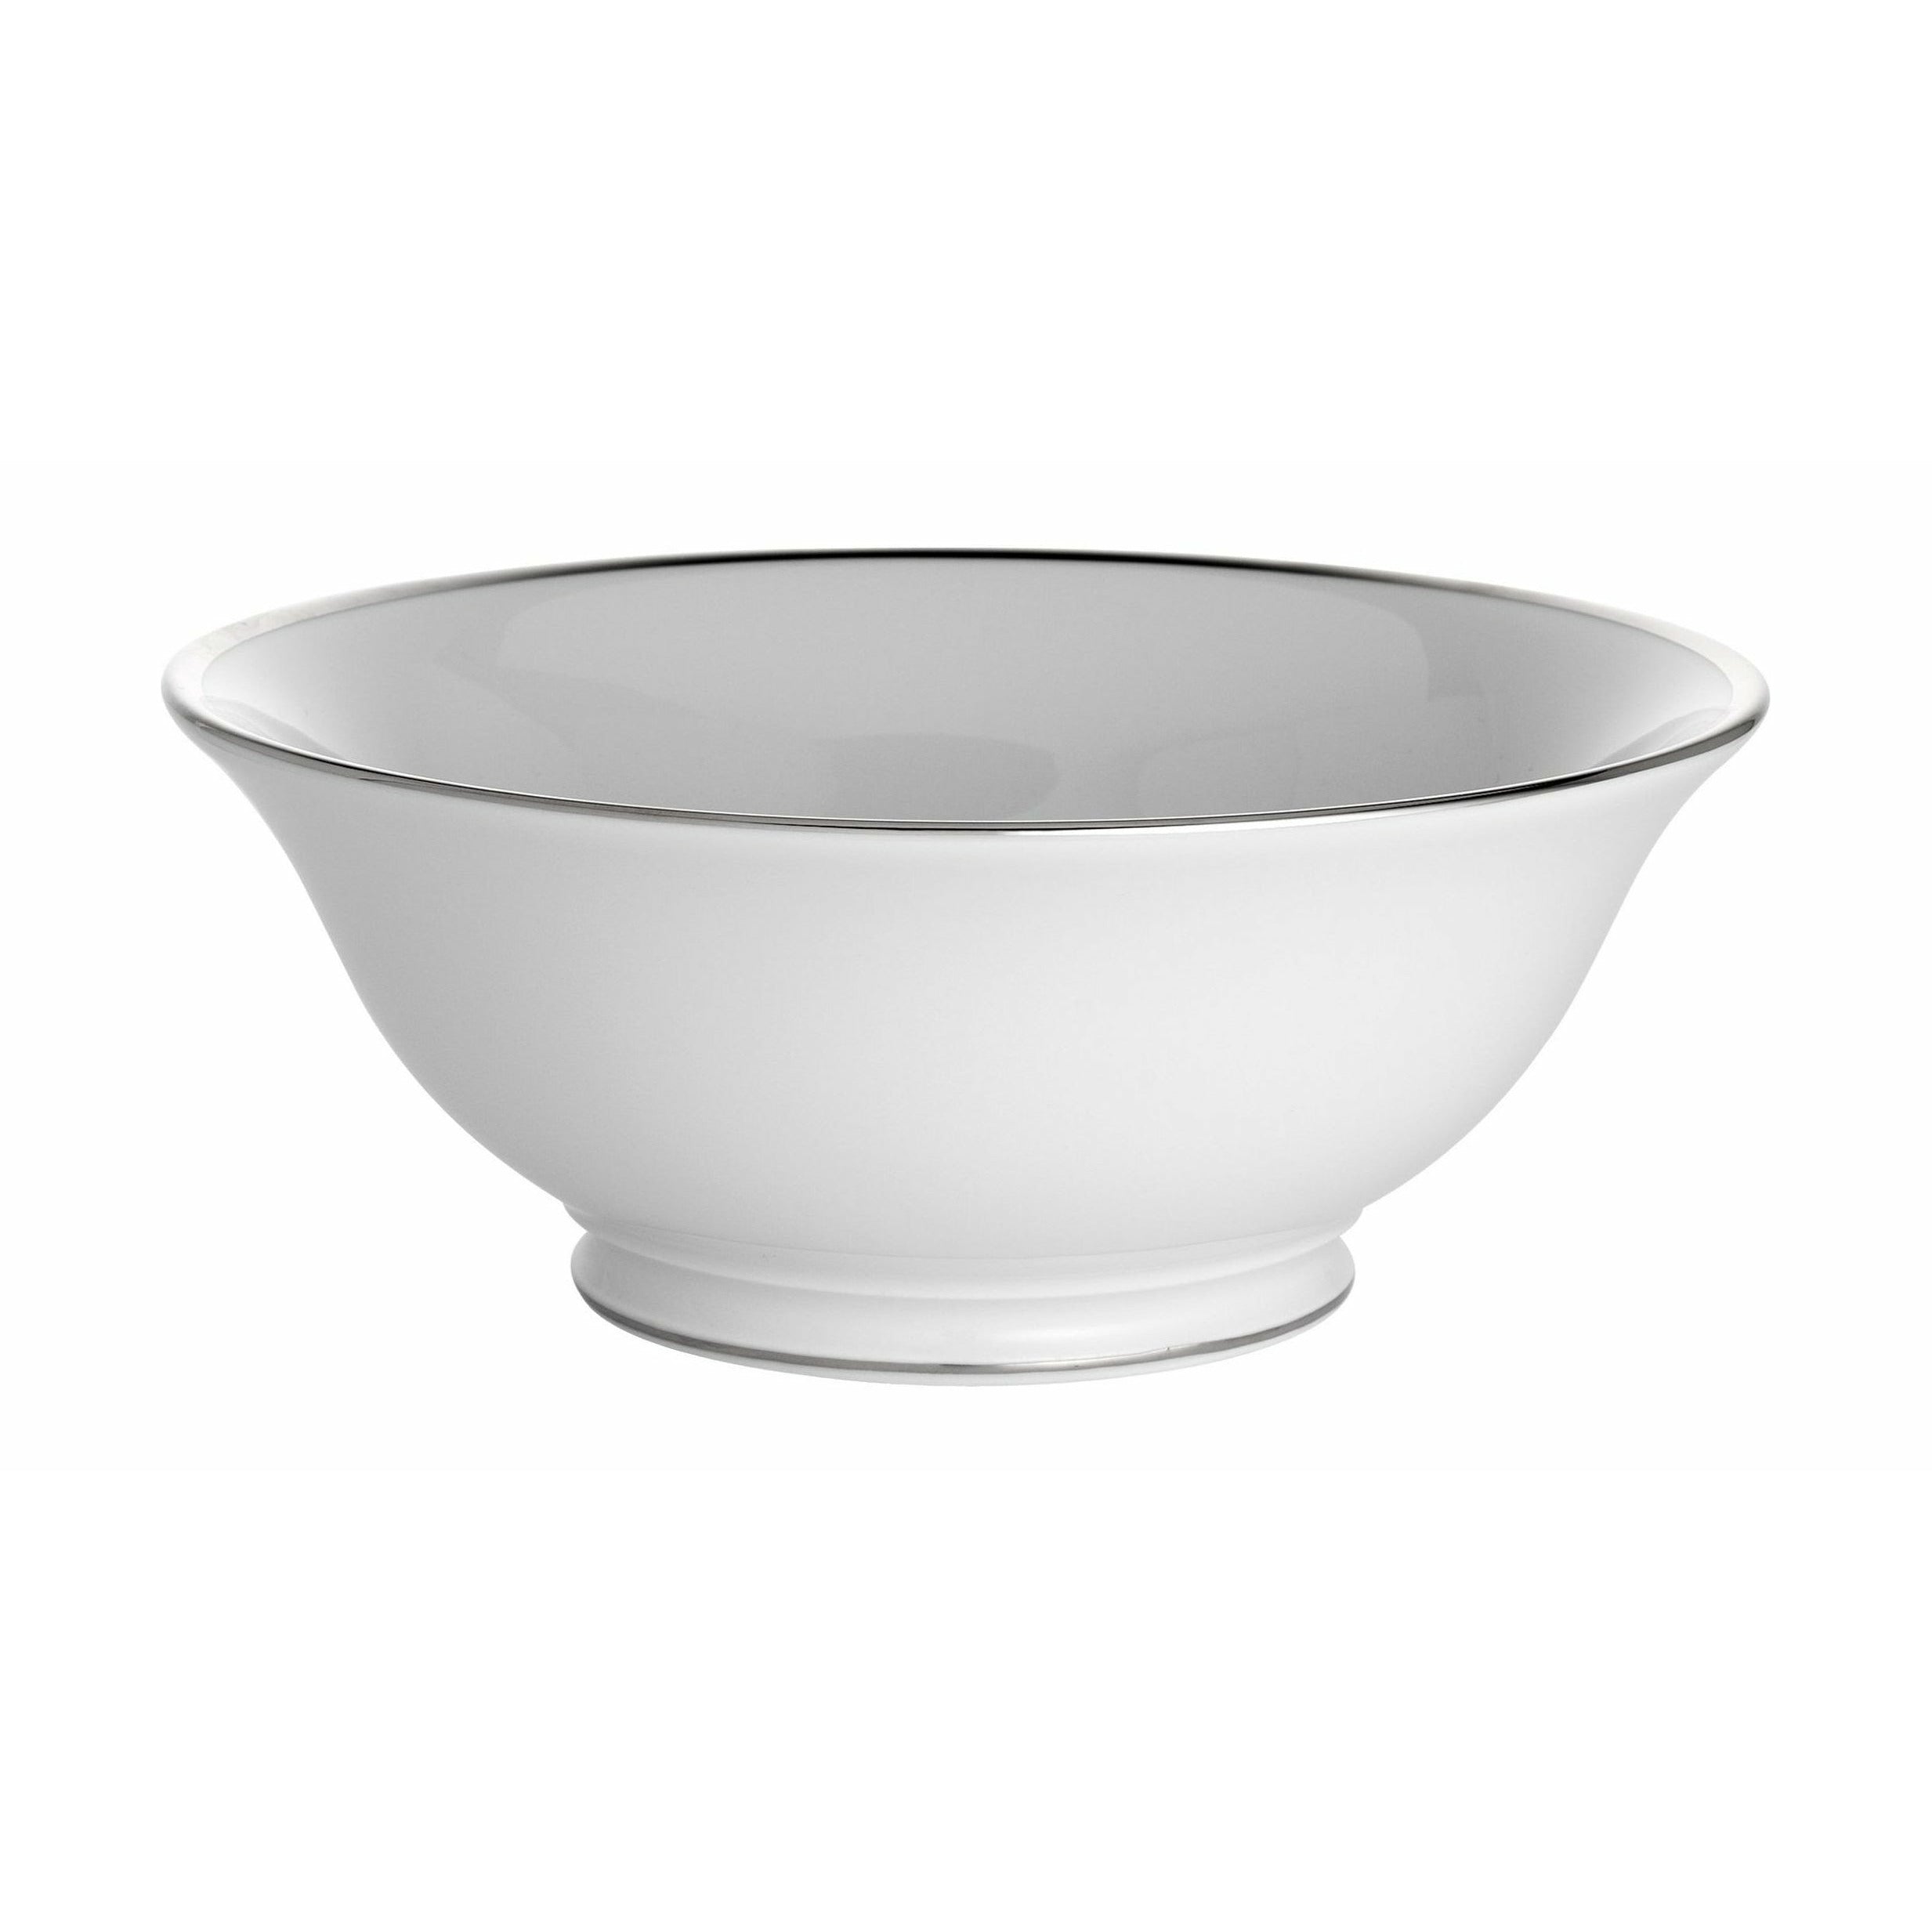 Pillivuyt Bistro Salary Bowl No. 9, wit/zilver